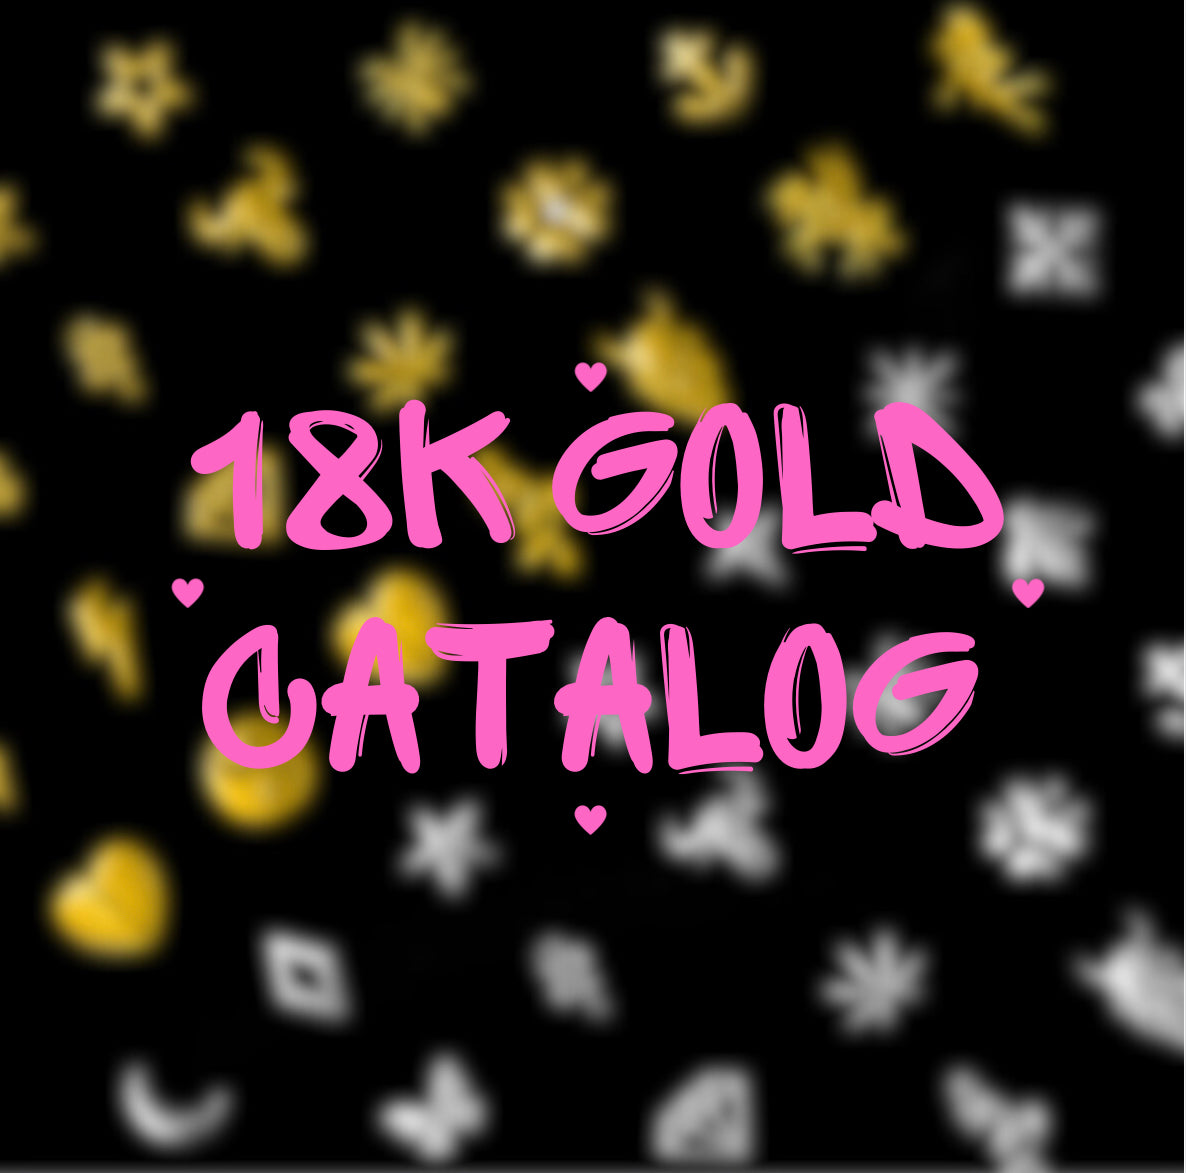 18k Gold Catalog PDF